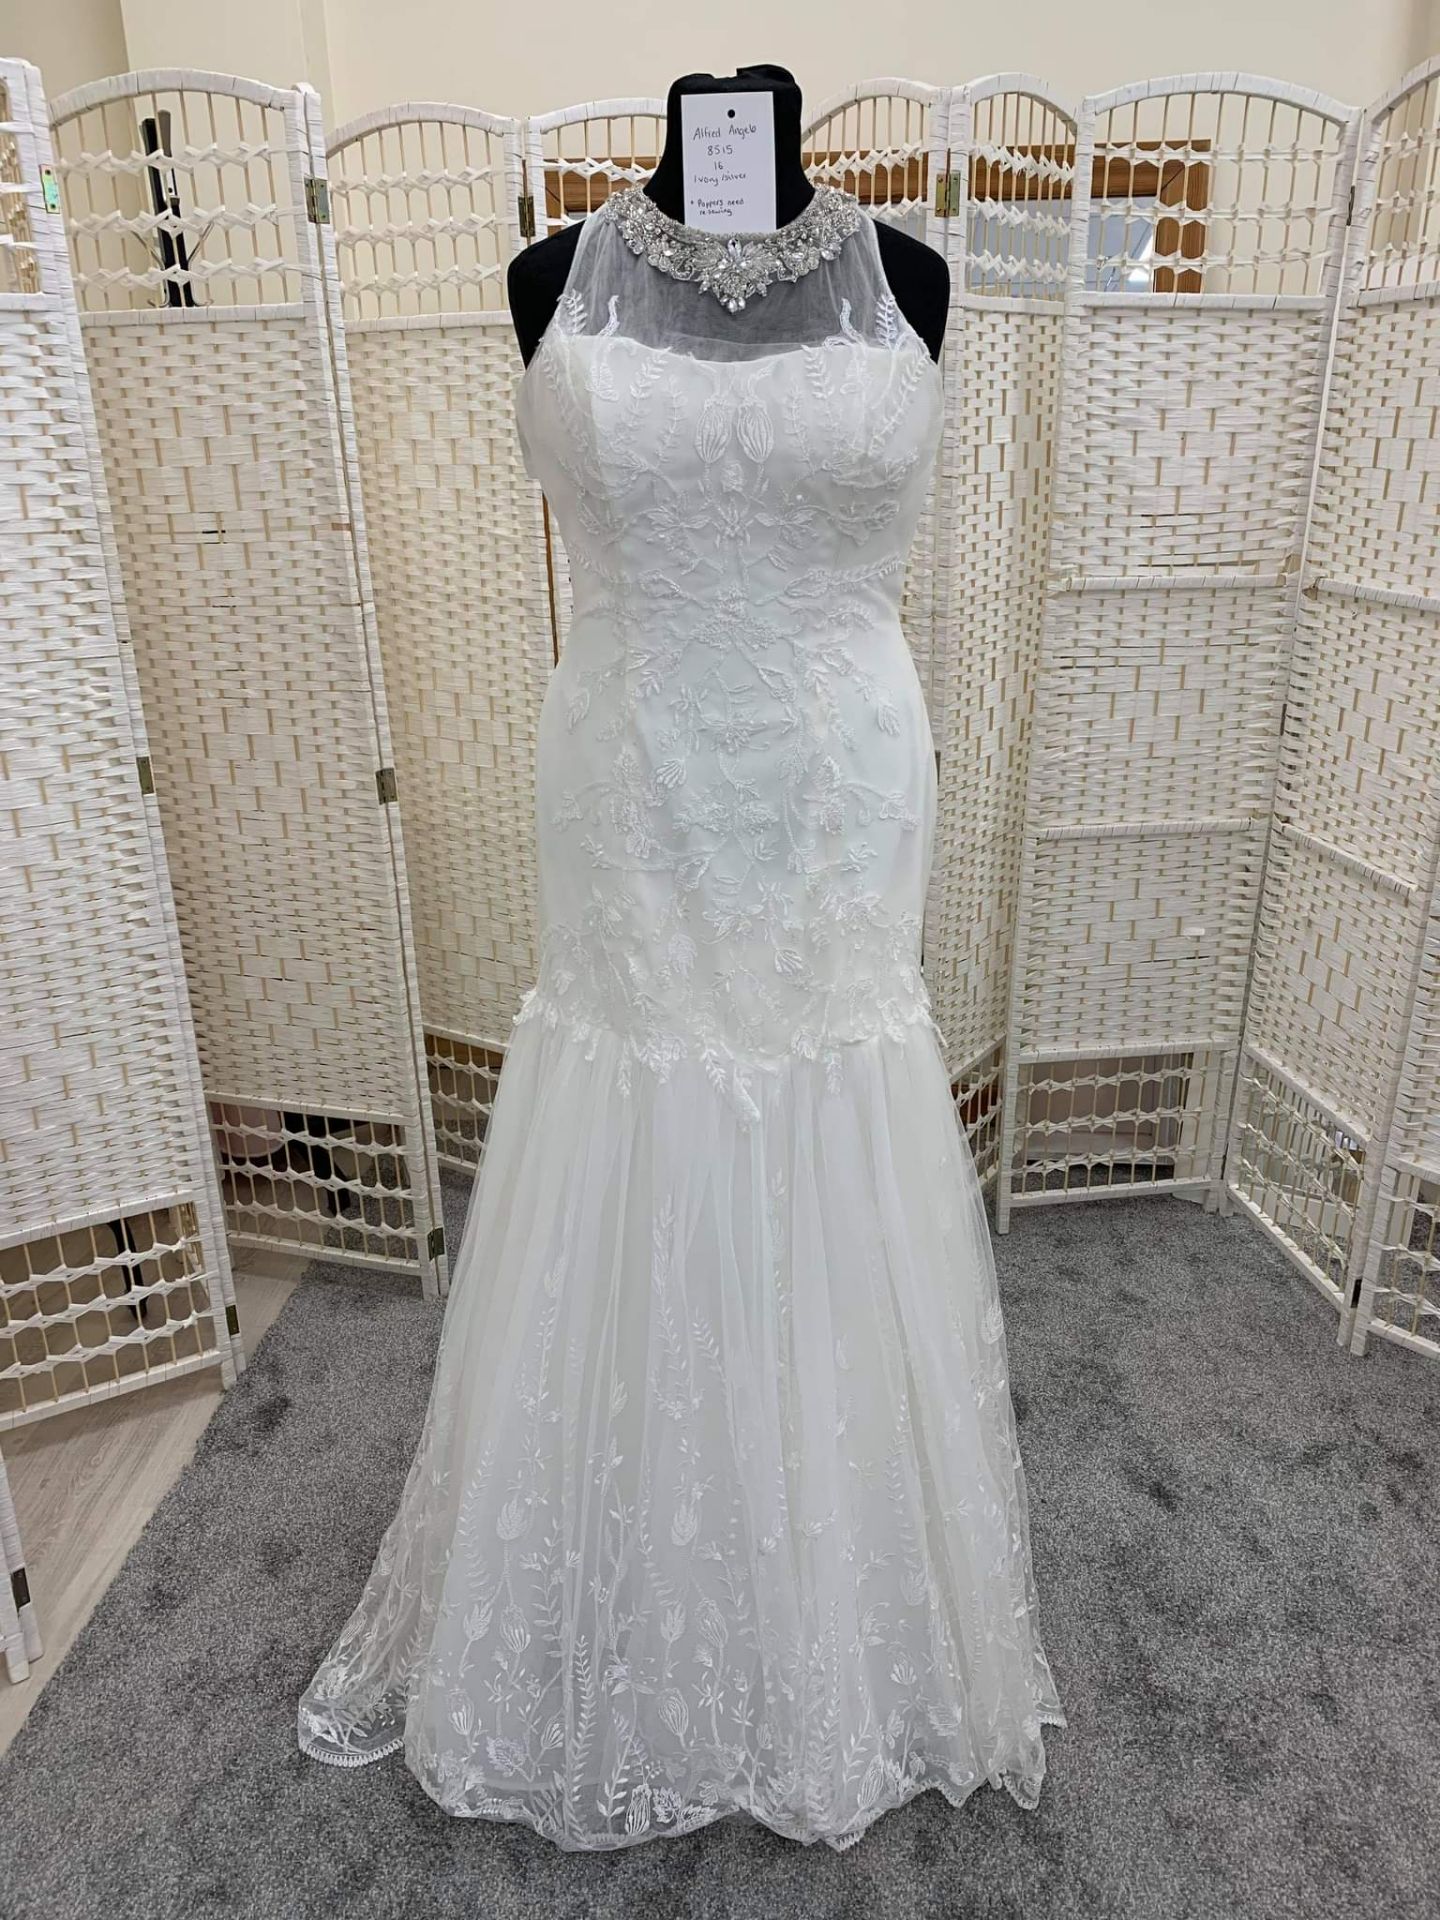 Alfred Angelo Wedding Dress UK 8516 Size 16 - Image 2 of 3